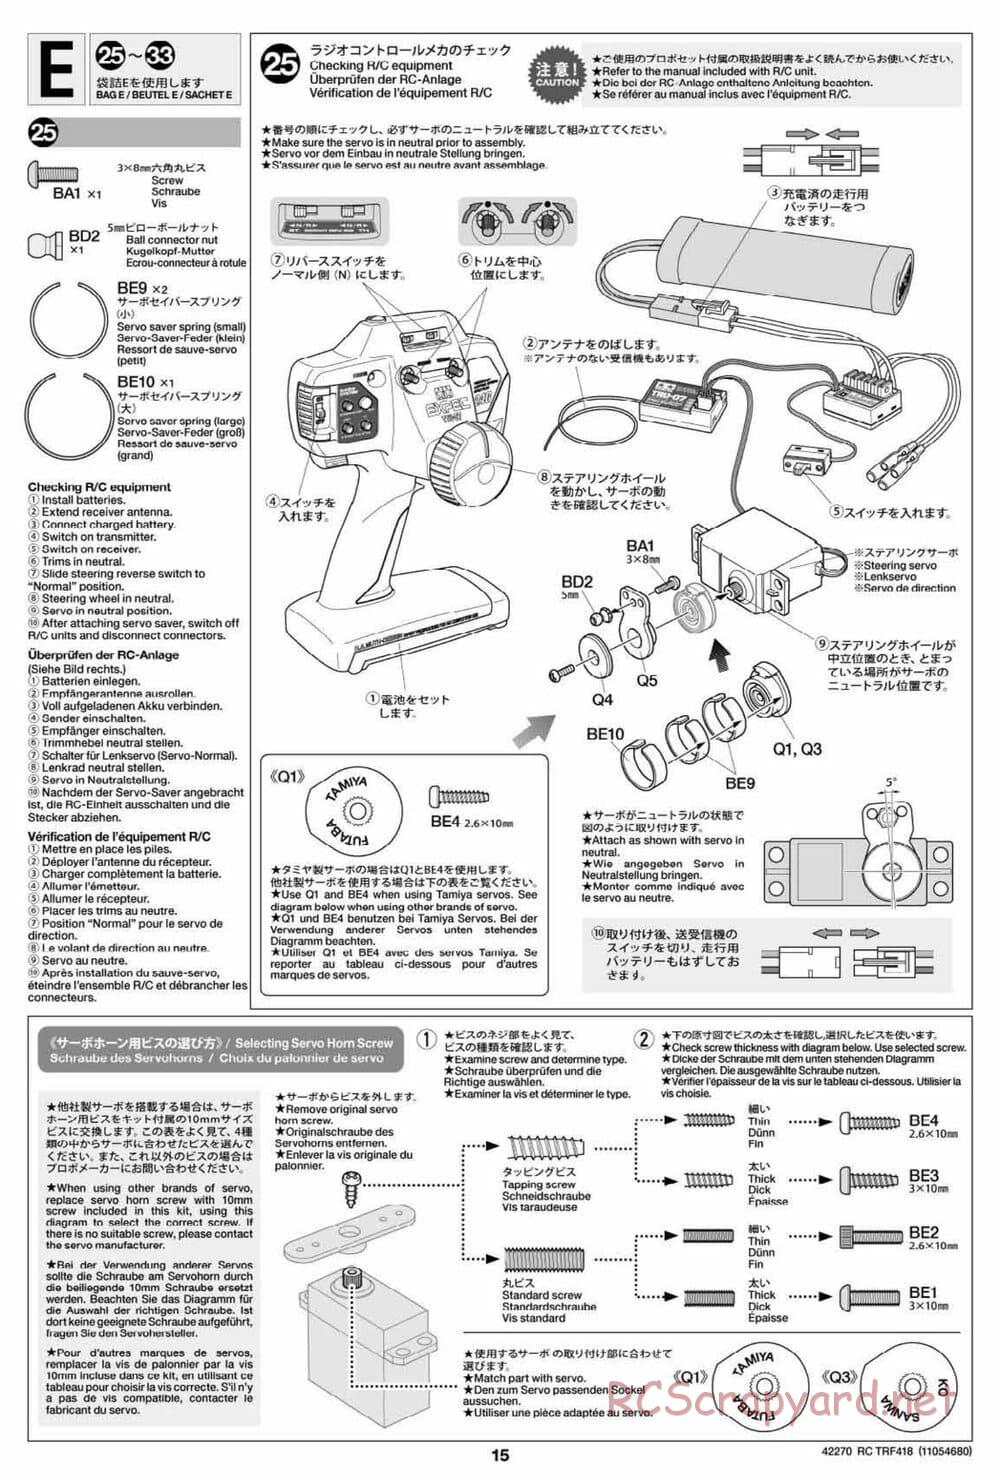 Tamiya - TRF418 Chassis - Manual - Page 15